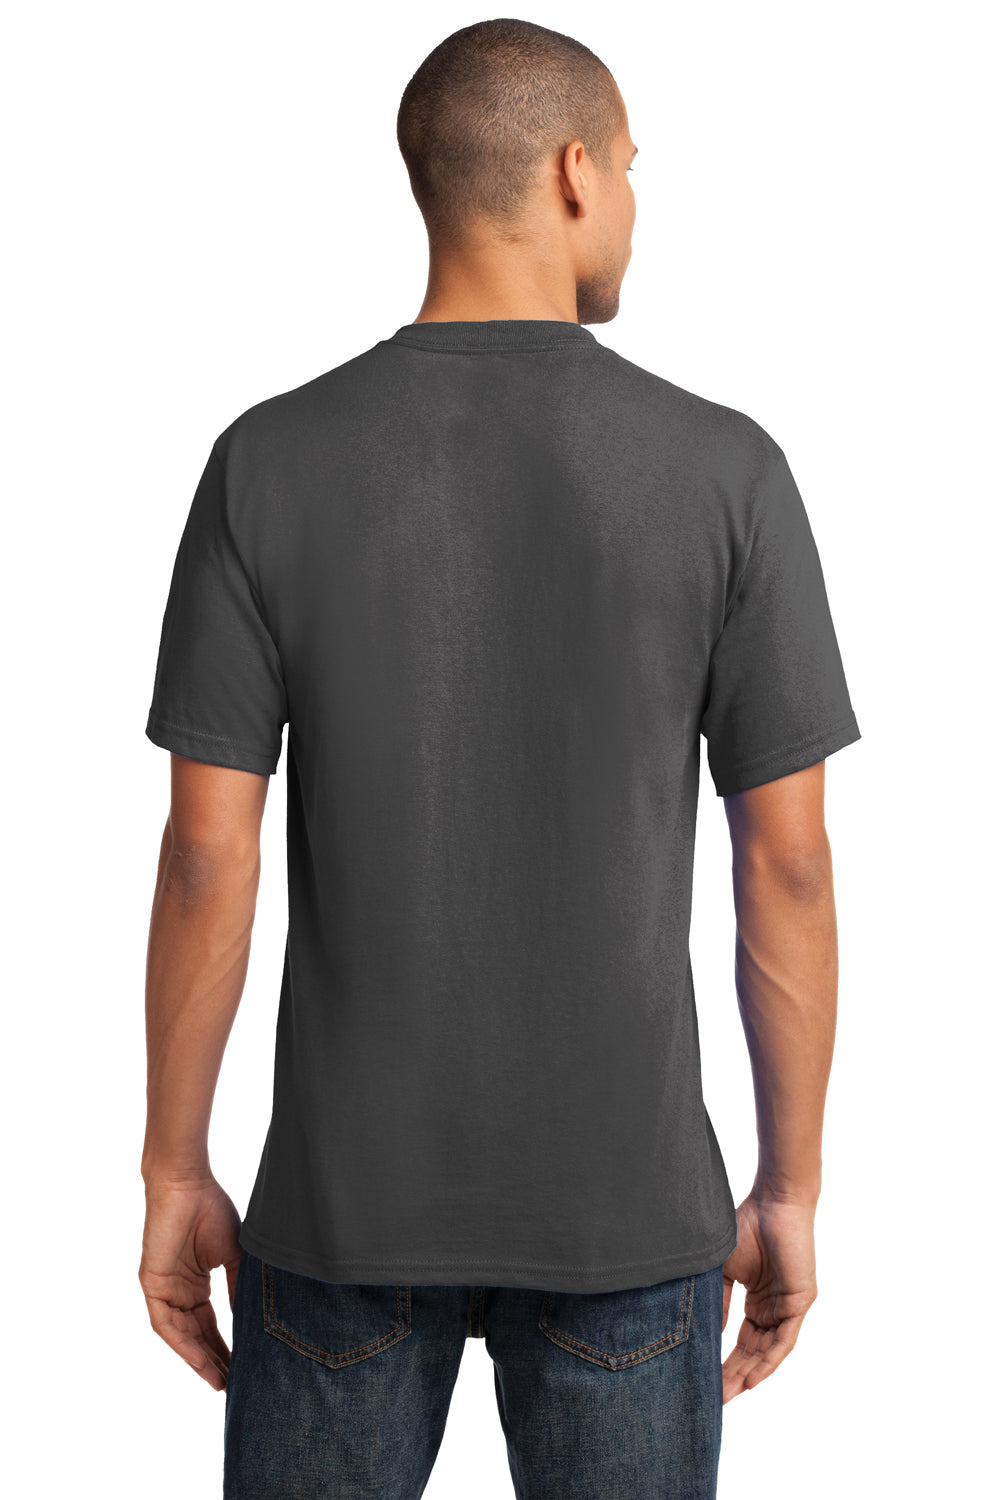 Port & Company PC54V Mens Core Short Sleeve V-Neck T-Shirt Charcoal Grey Back